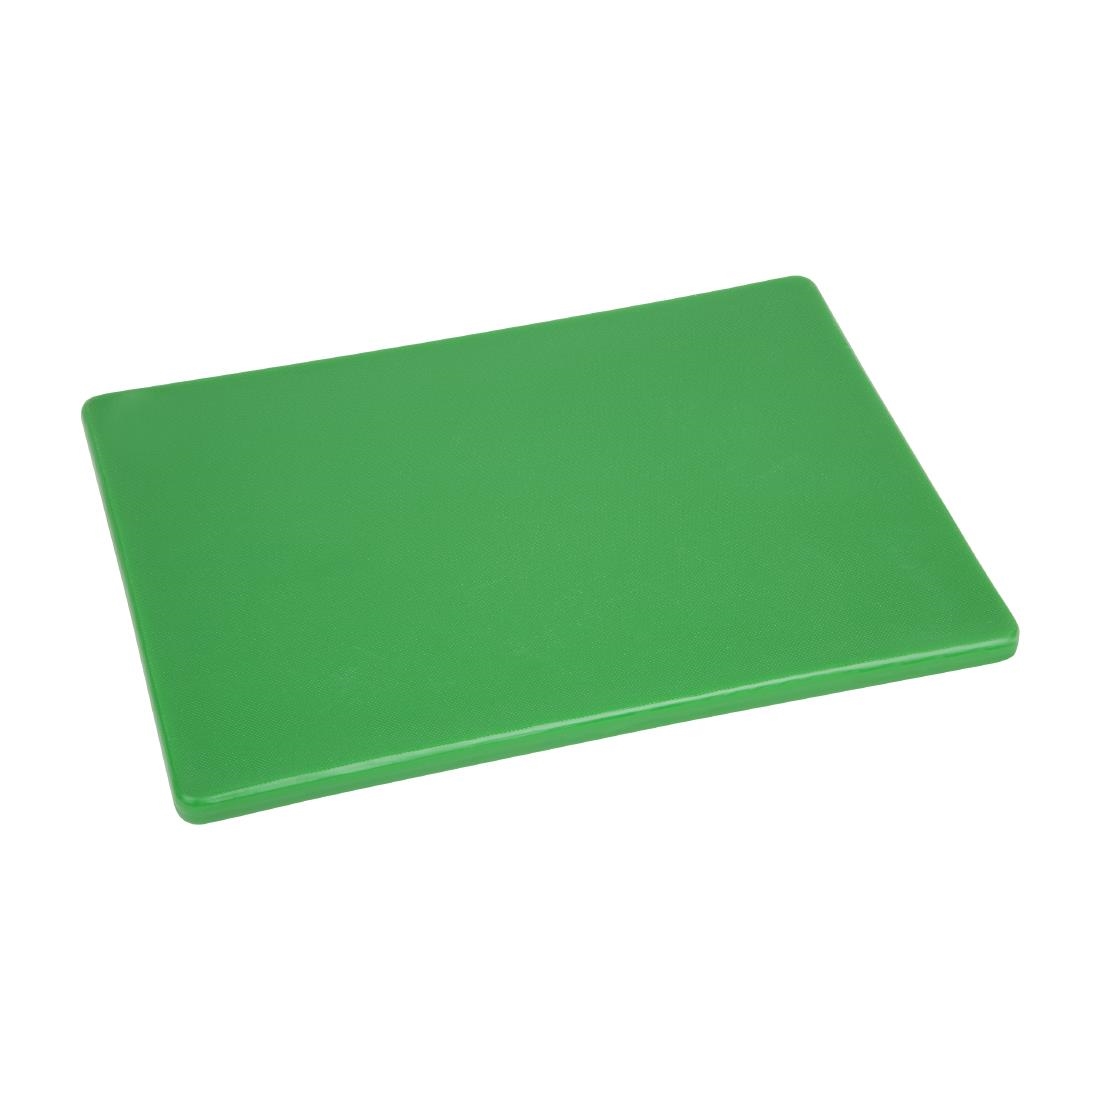 Hygiplas Low Density Green Chopping Board Small